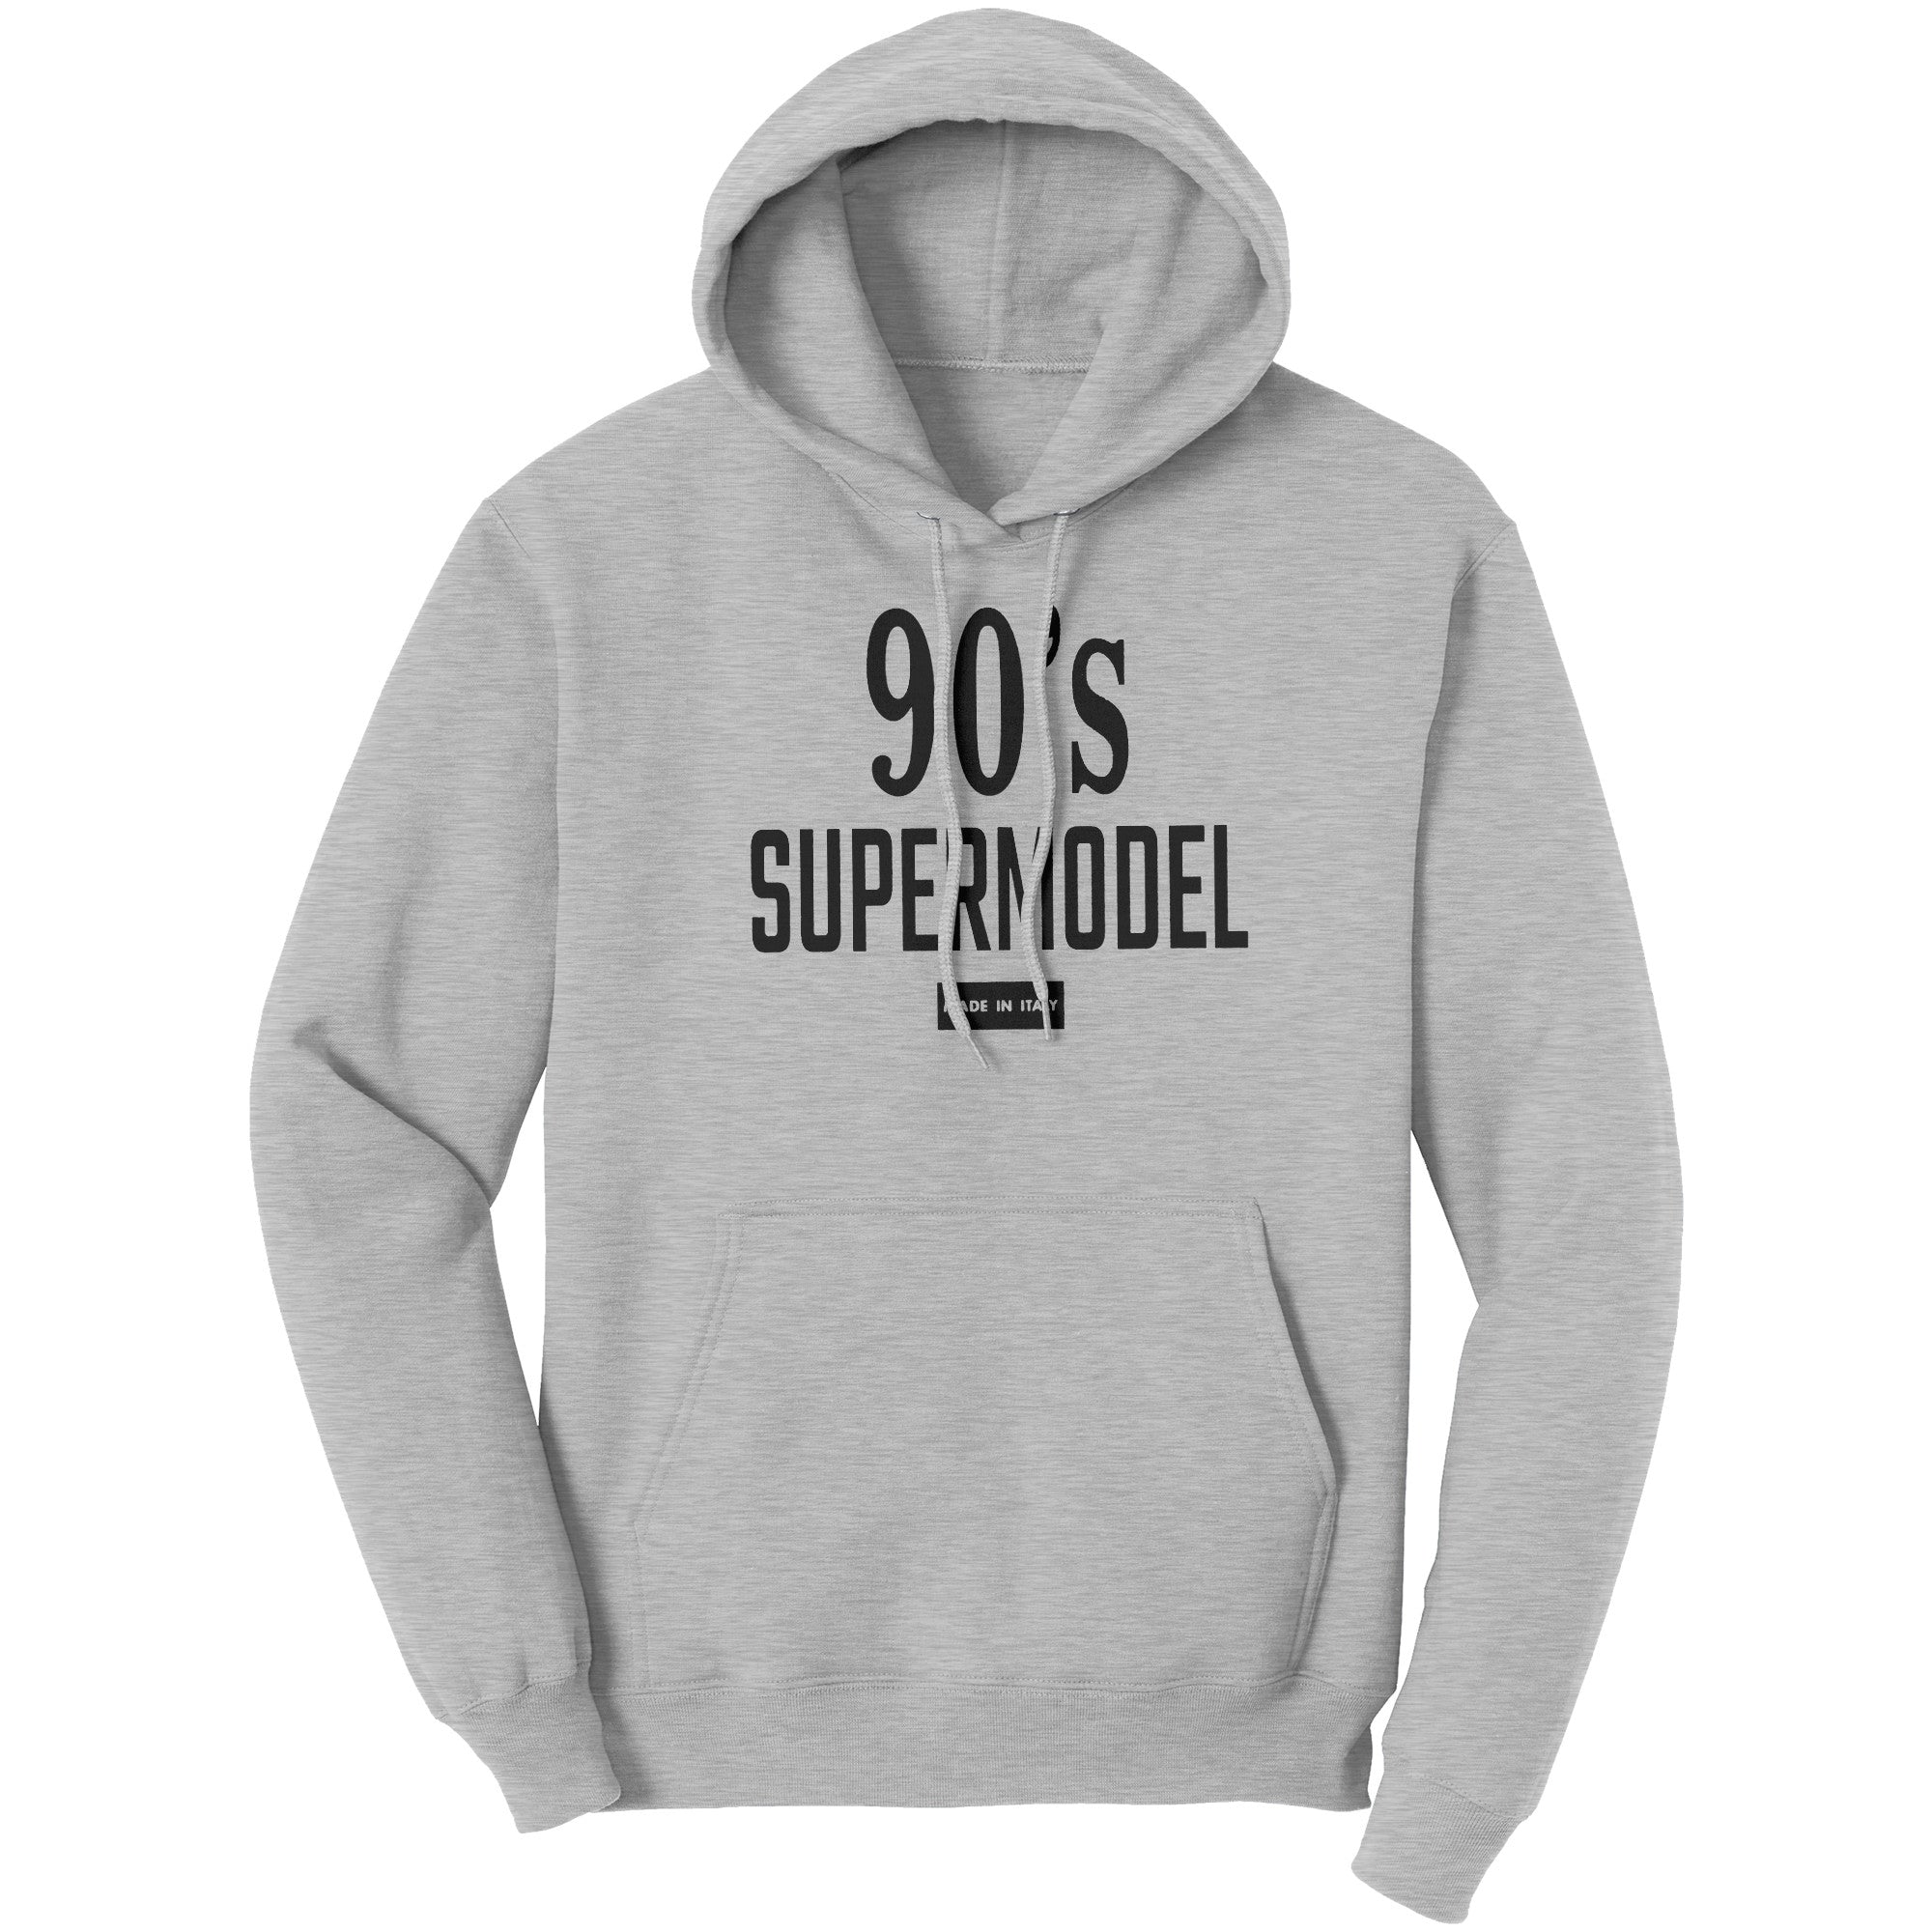 90 Supermodel Hoodie Sweatshirt